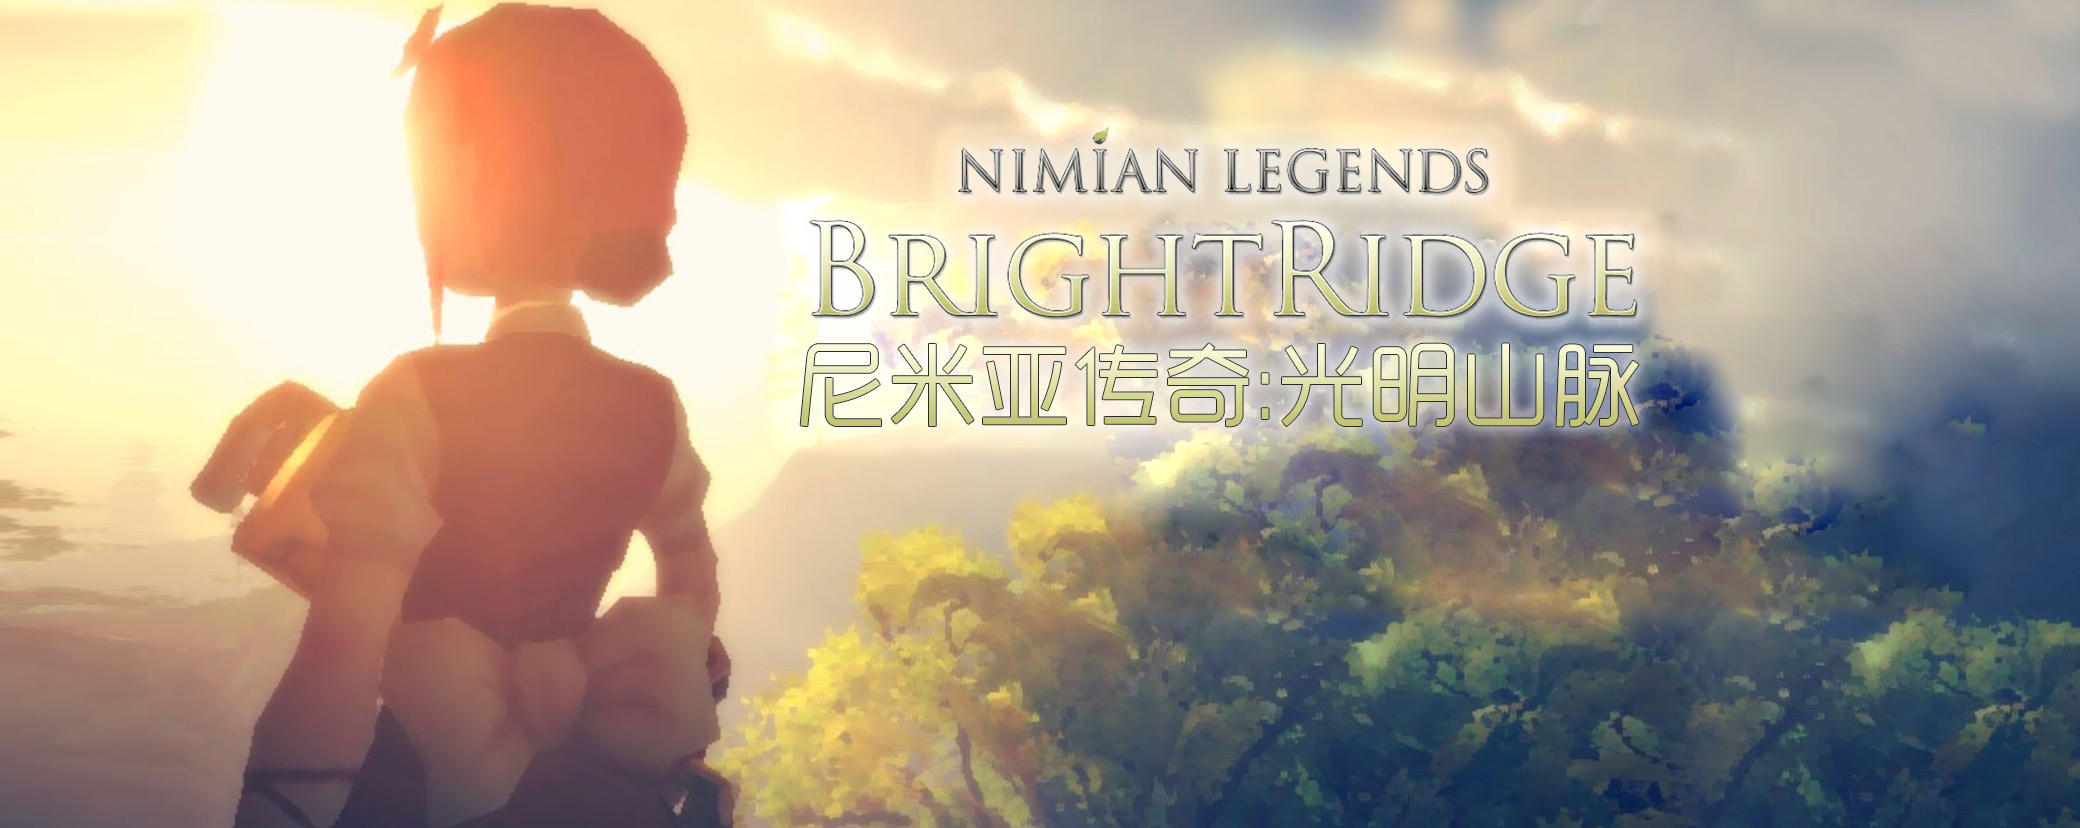 Banner of Huyền thoại Nimian : BrightRidge 